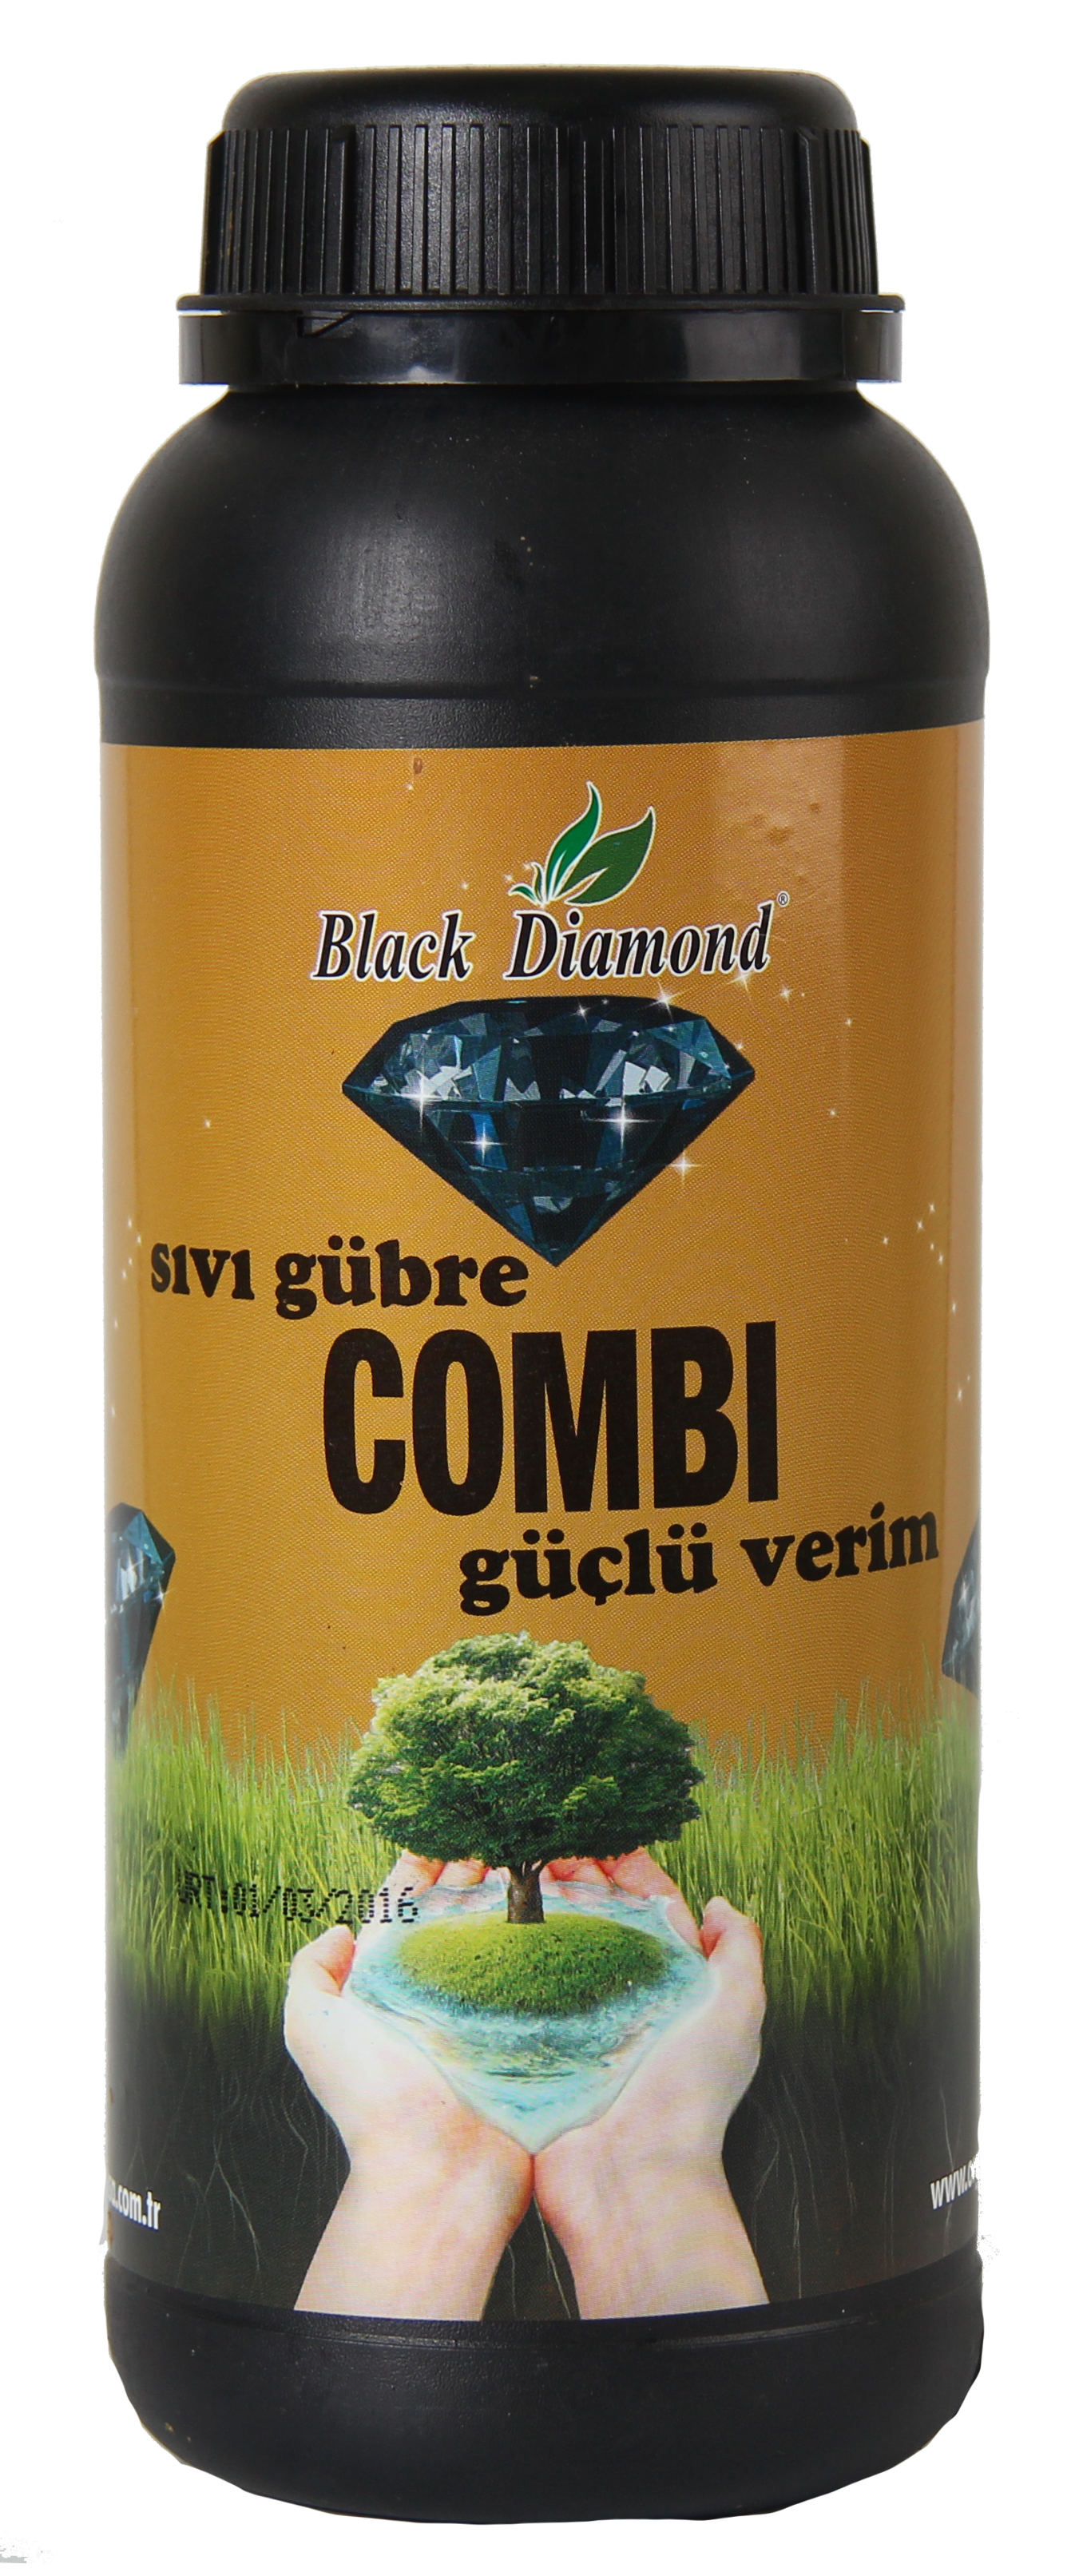 Black Diamond Combi Image